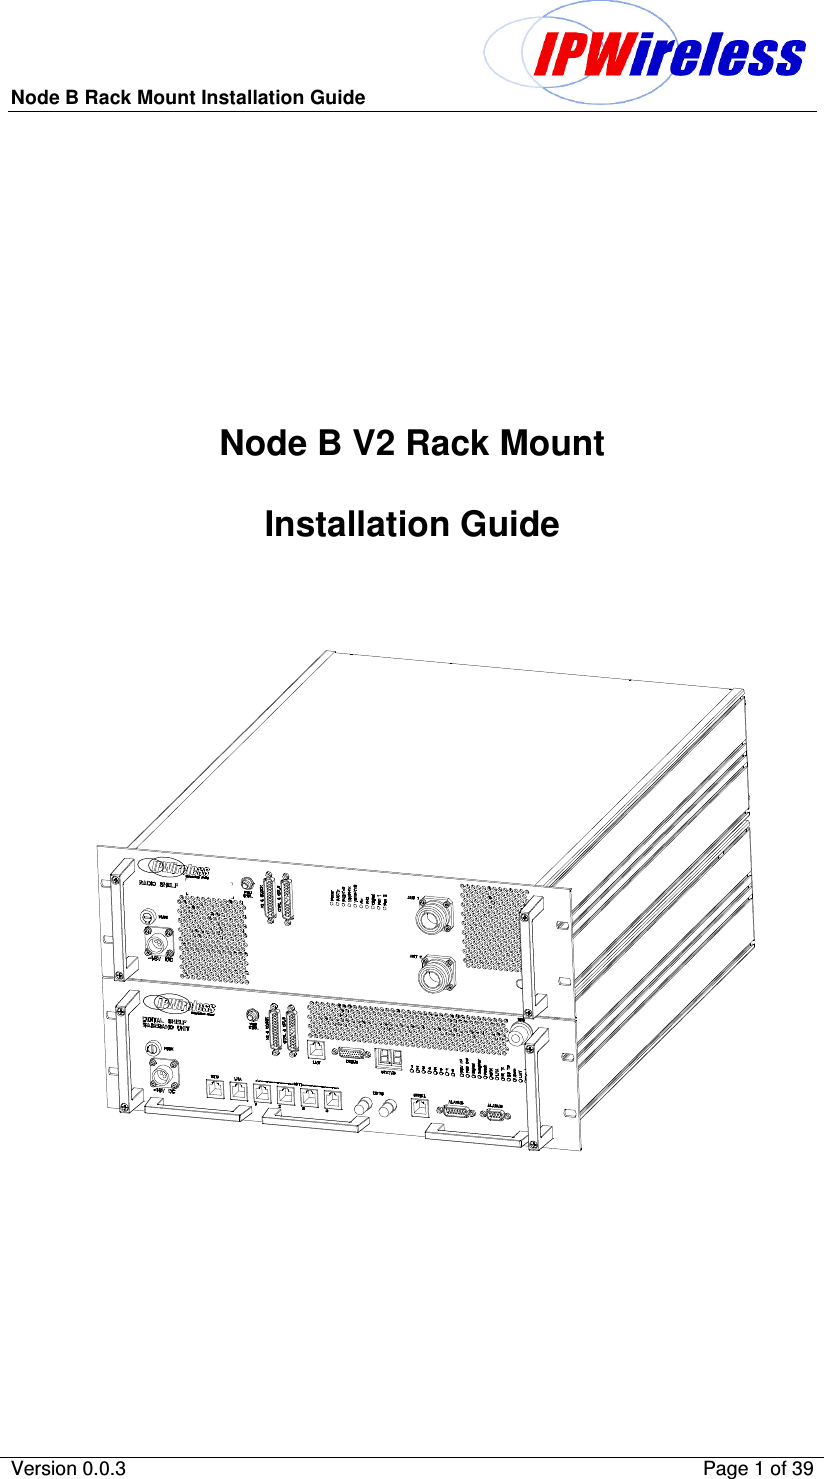 Node B Rack Mount Installation Guide                          Version 0.0.3    Page 1 of 39         Node B V2 Rack Mount  Installation Guide           